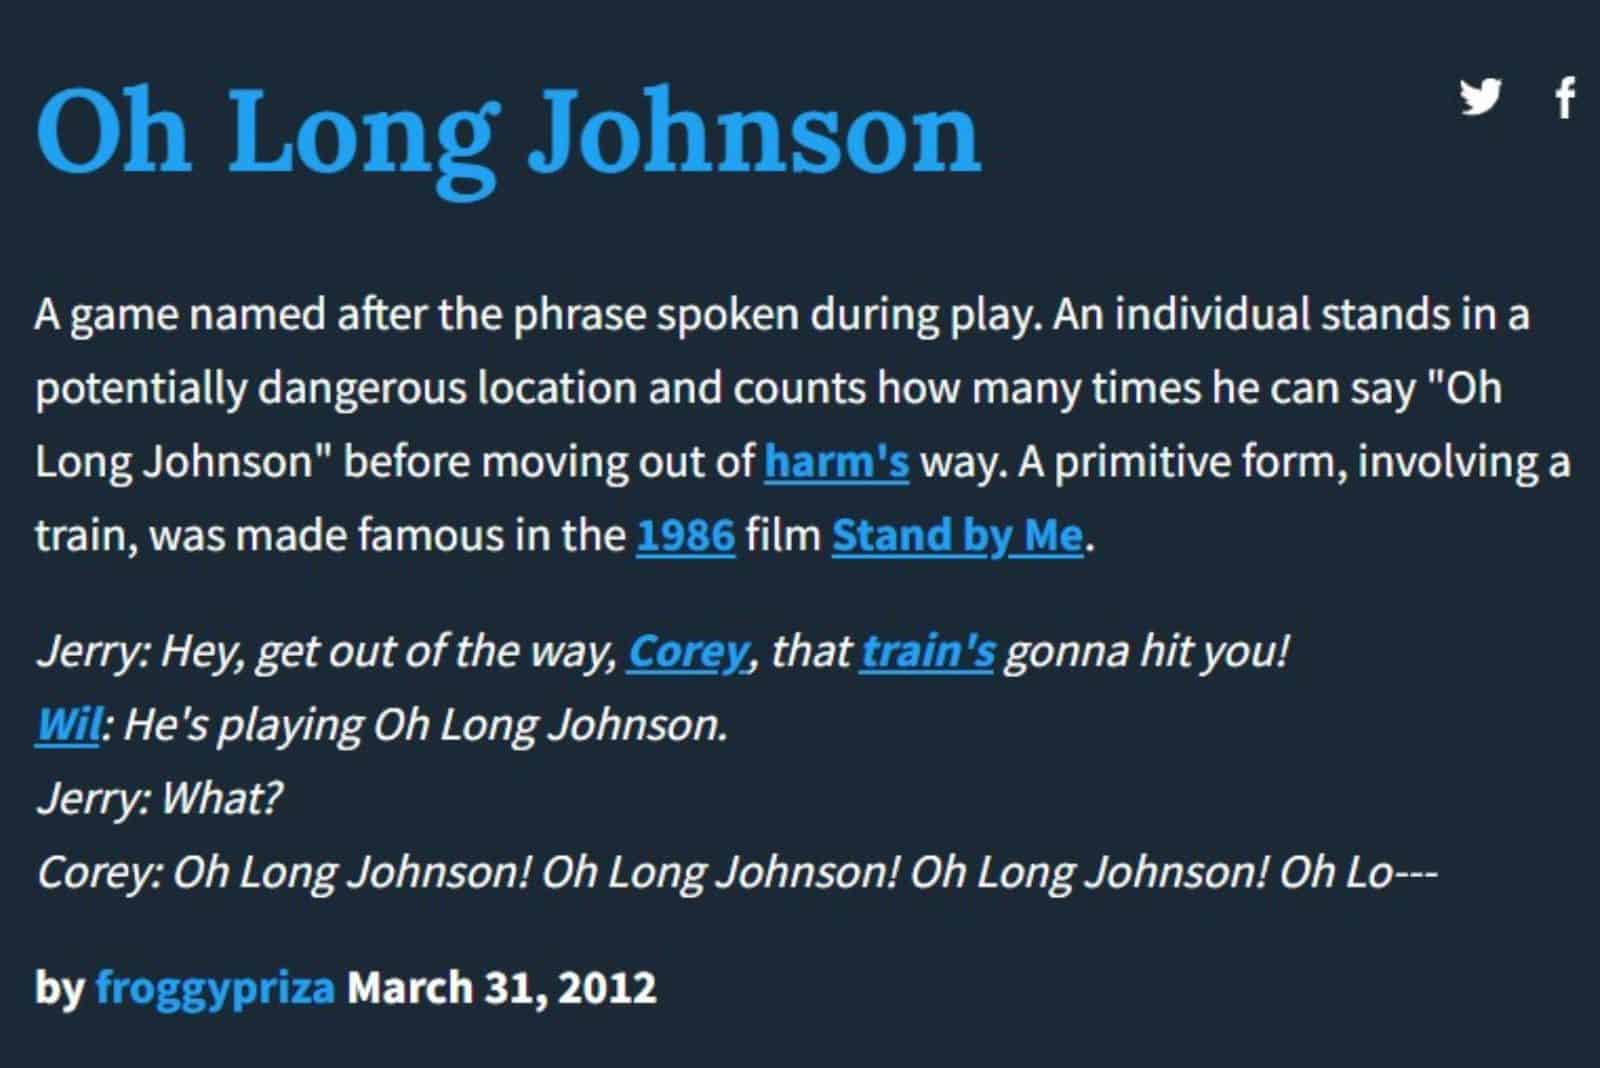 Urban Dictionary's explanation of Oh Long Johnson